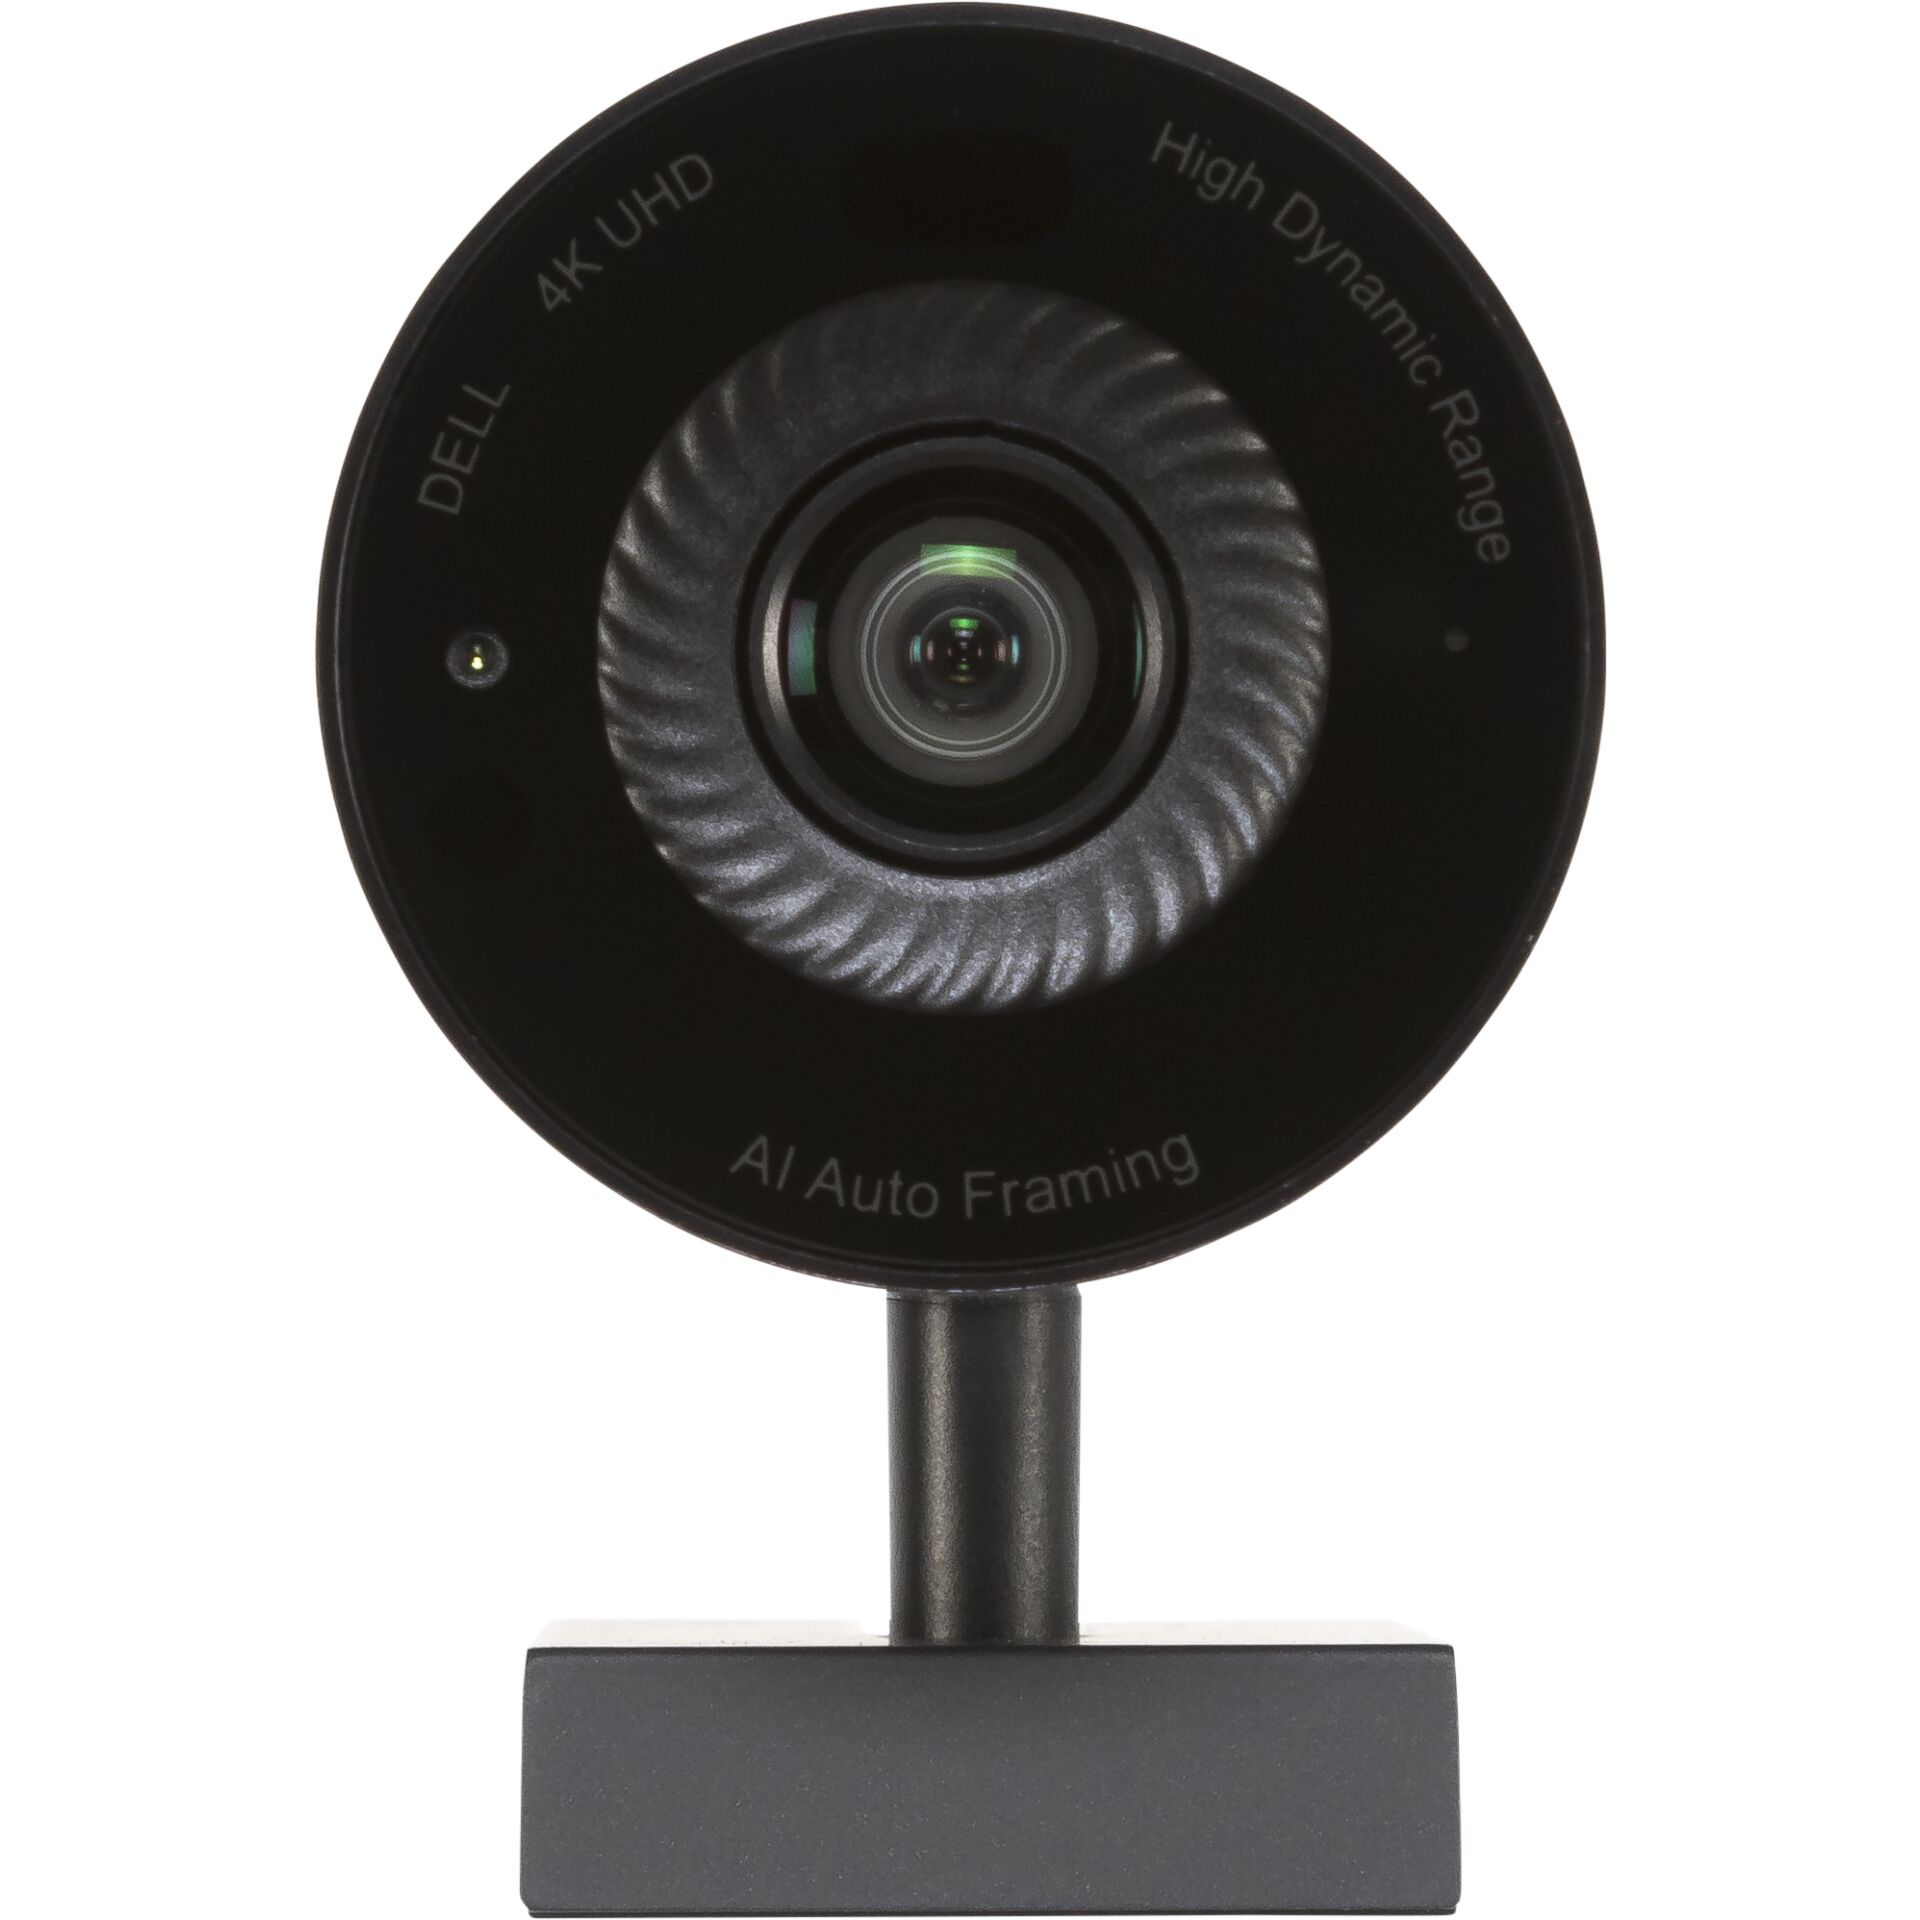 Dell UltraSharp Webcam WB7022, USB-C 3.0, 4K UHD, HDR, AI Auto Framing, unterstützt Windows Hello